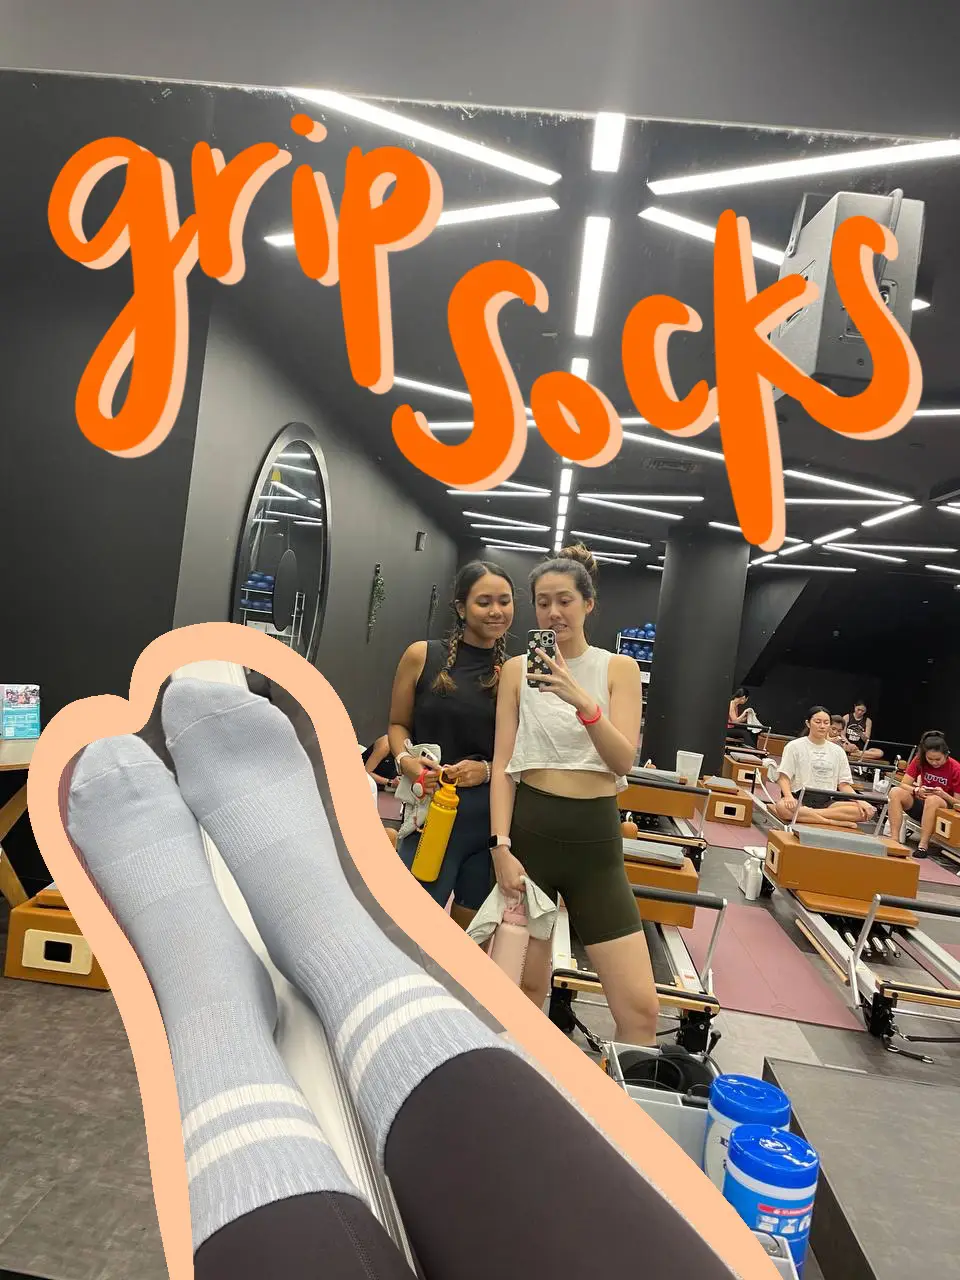 Decathlon Pilates grip socks